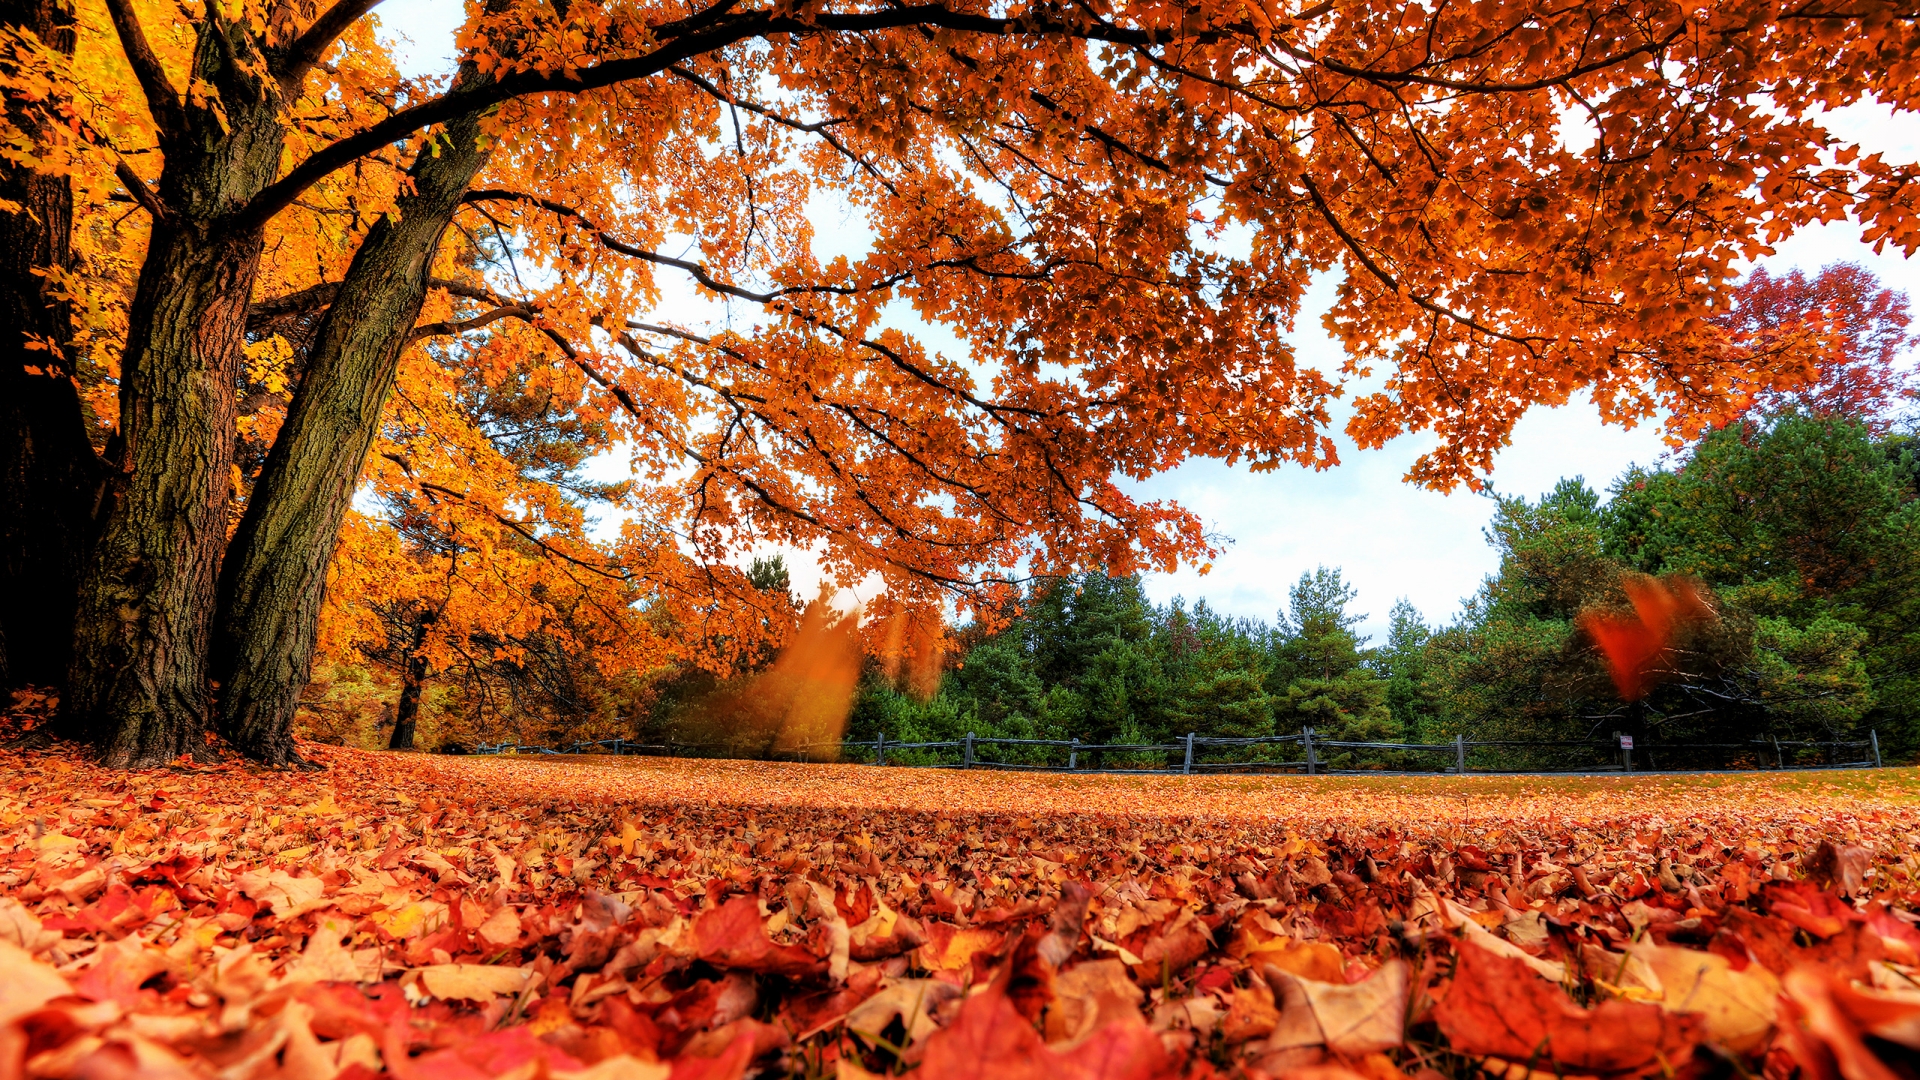 Autumn Maple Tree for 1920 x 1080 HDTV 1080p resolution